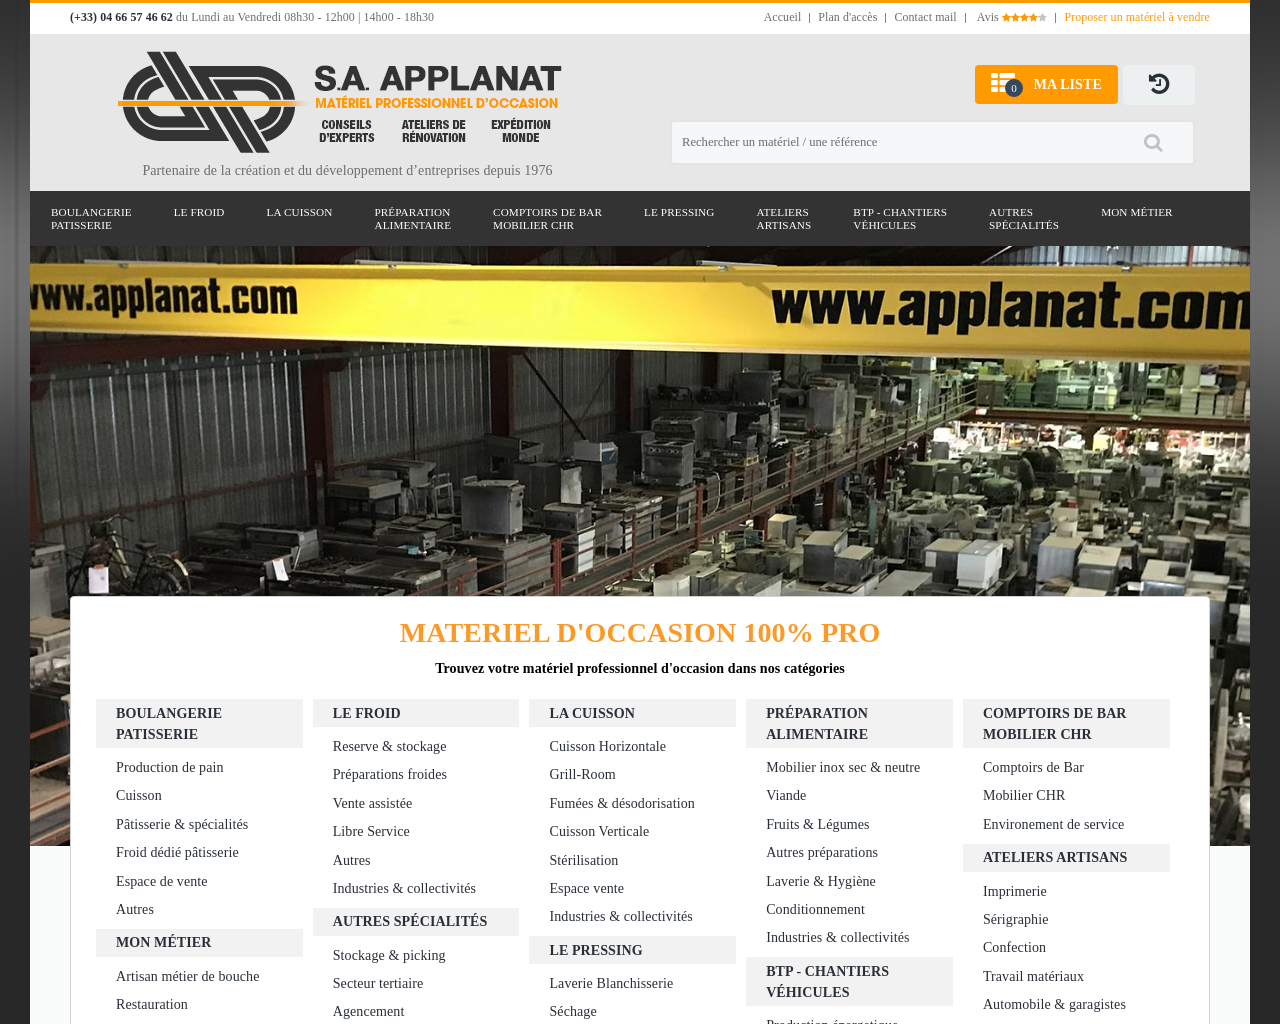 www.applanat.com